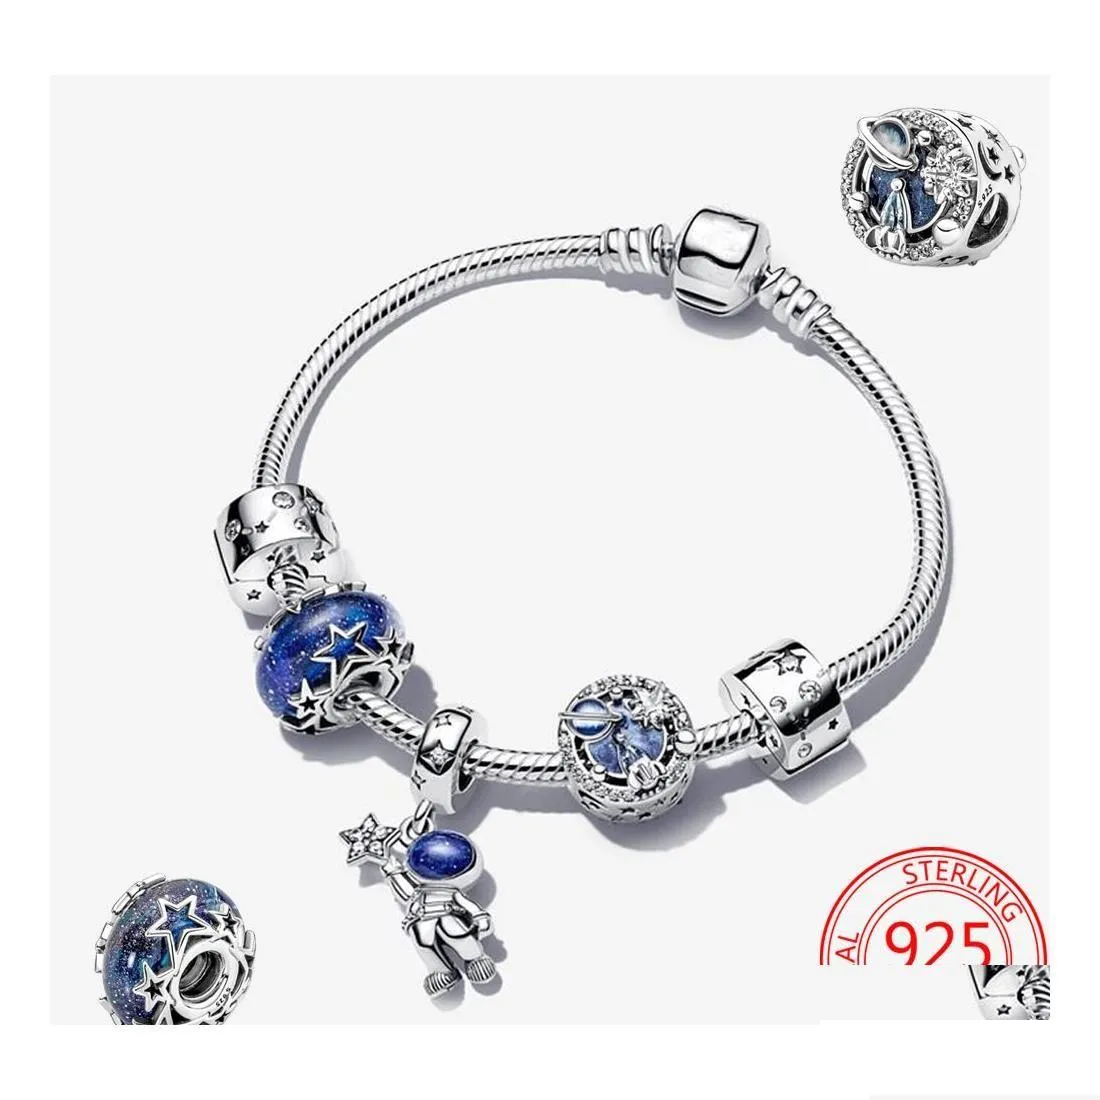 charm bracelets 925 pandoras sterling sier theme ensesest bracelet set astronaut pendant galaxy visit womens jewelry romantic birthd